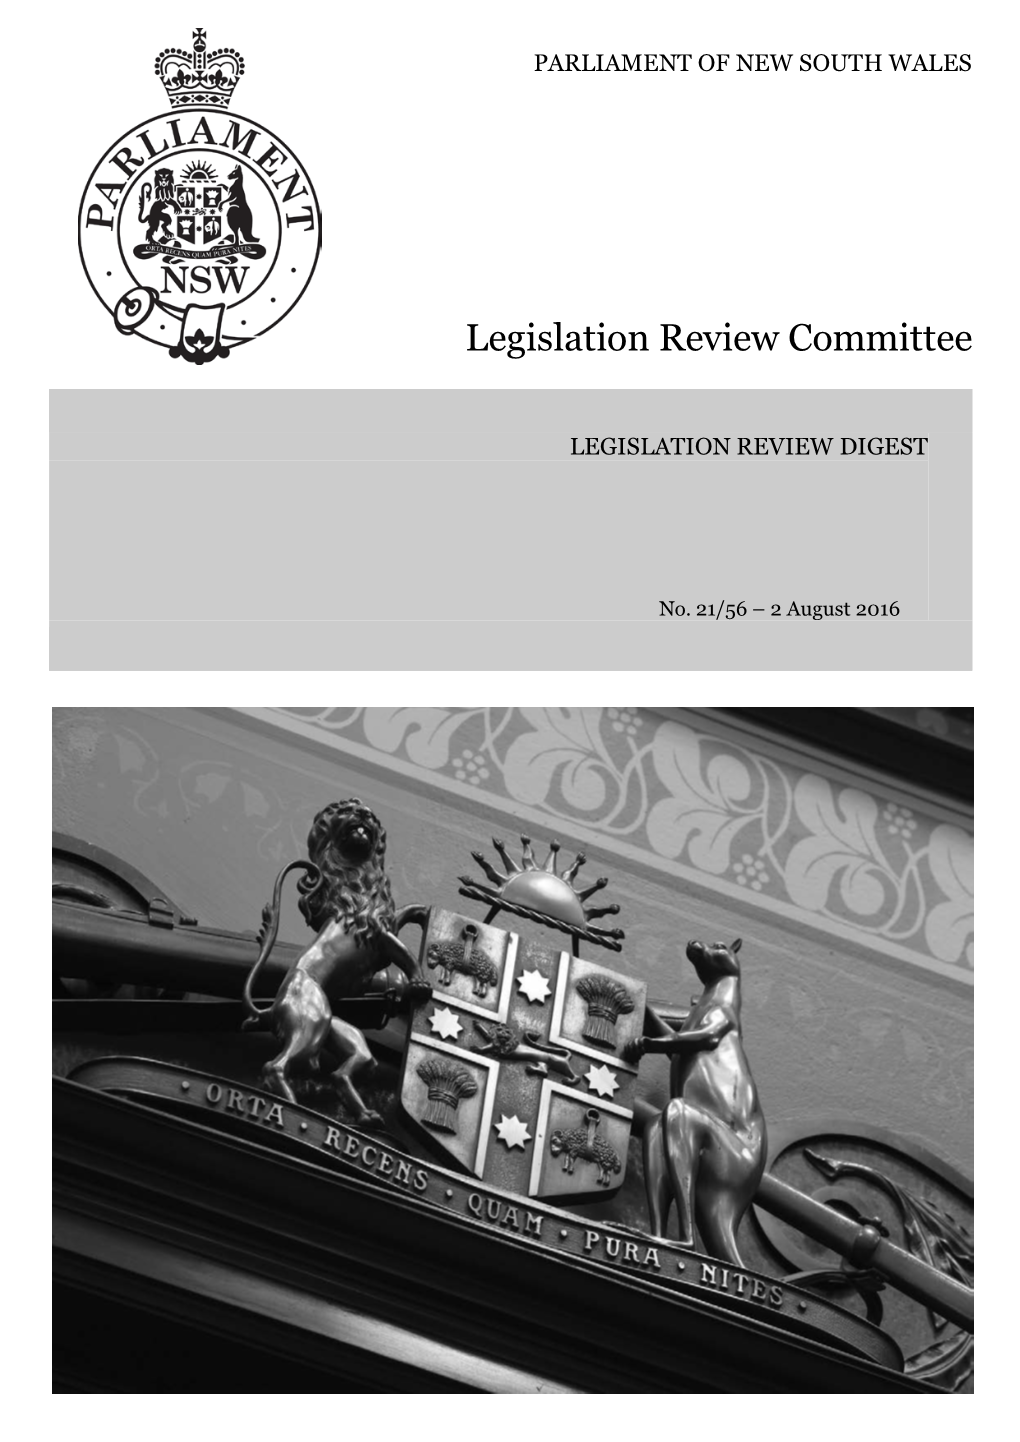 Legislation Review Digest No.10 of 2016